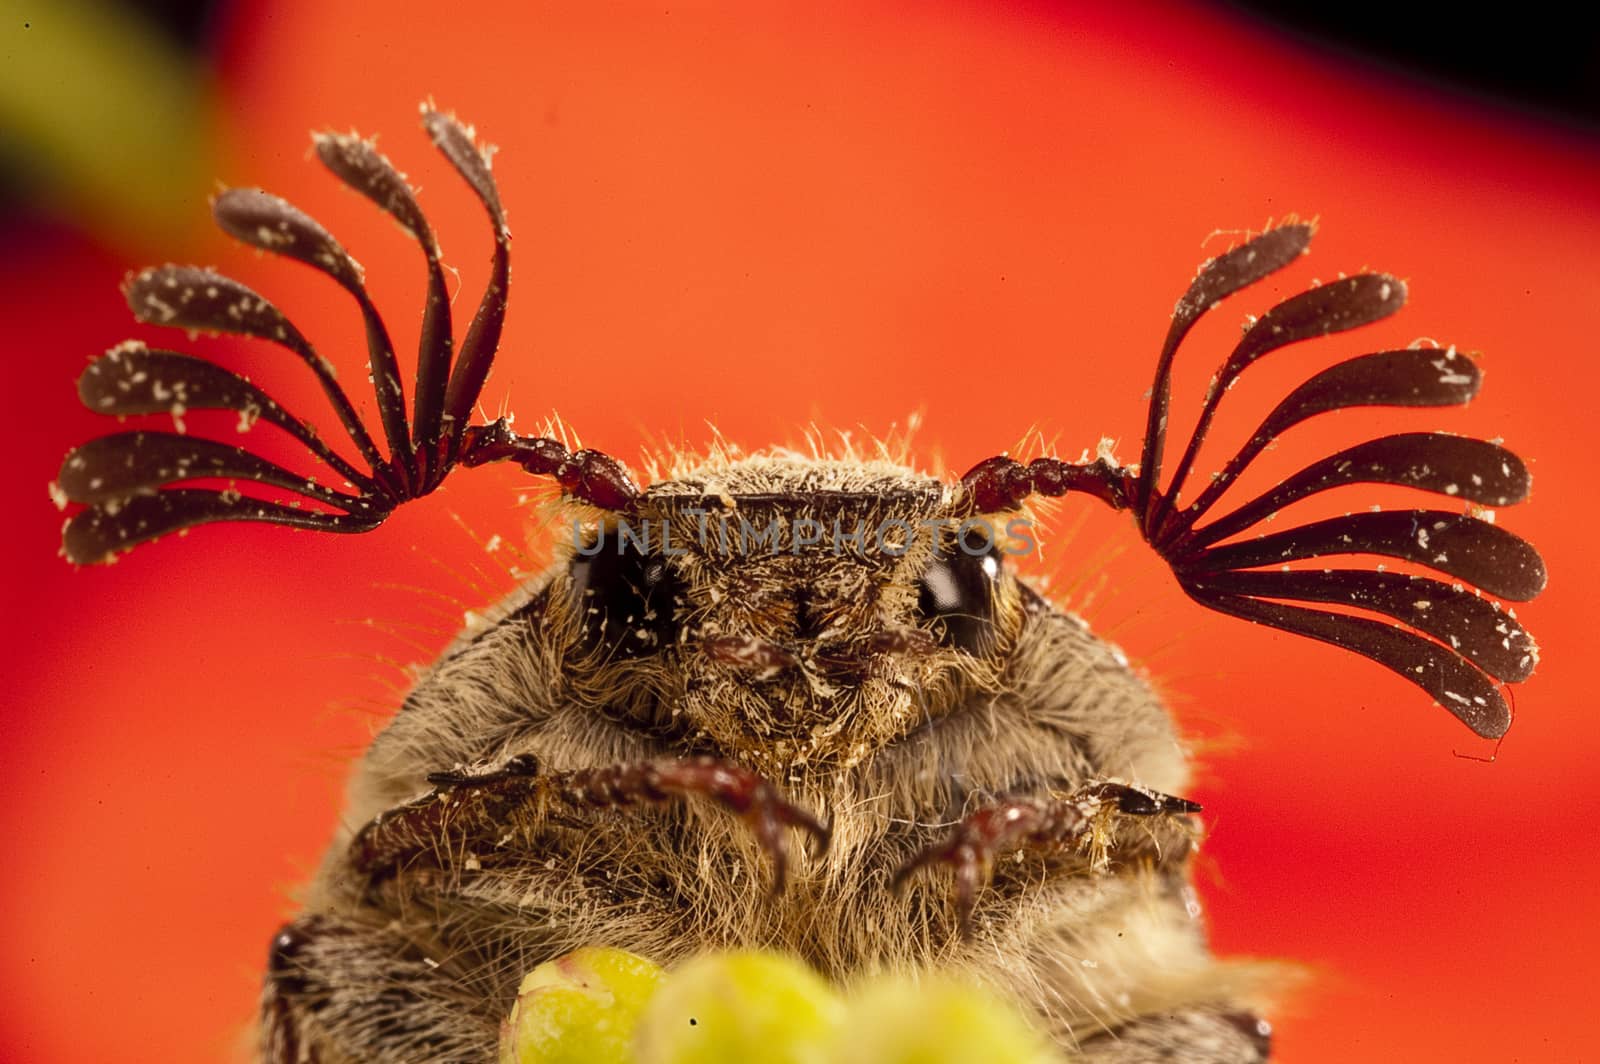 beetle sanjuanero portrait, Melolontha melolontha, Beetles, Cole by jalonsohu@gmail.com